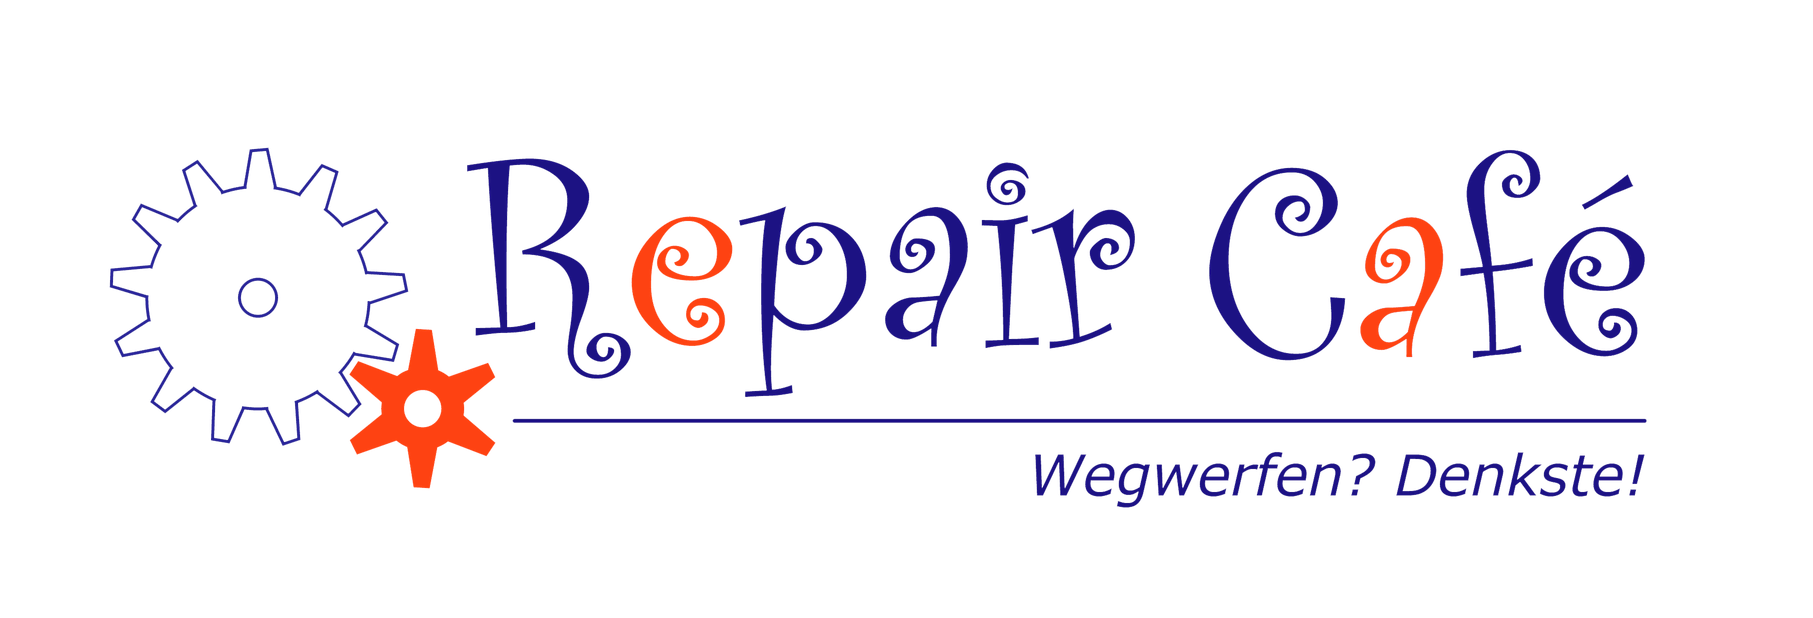 Das Repair Café Logo